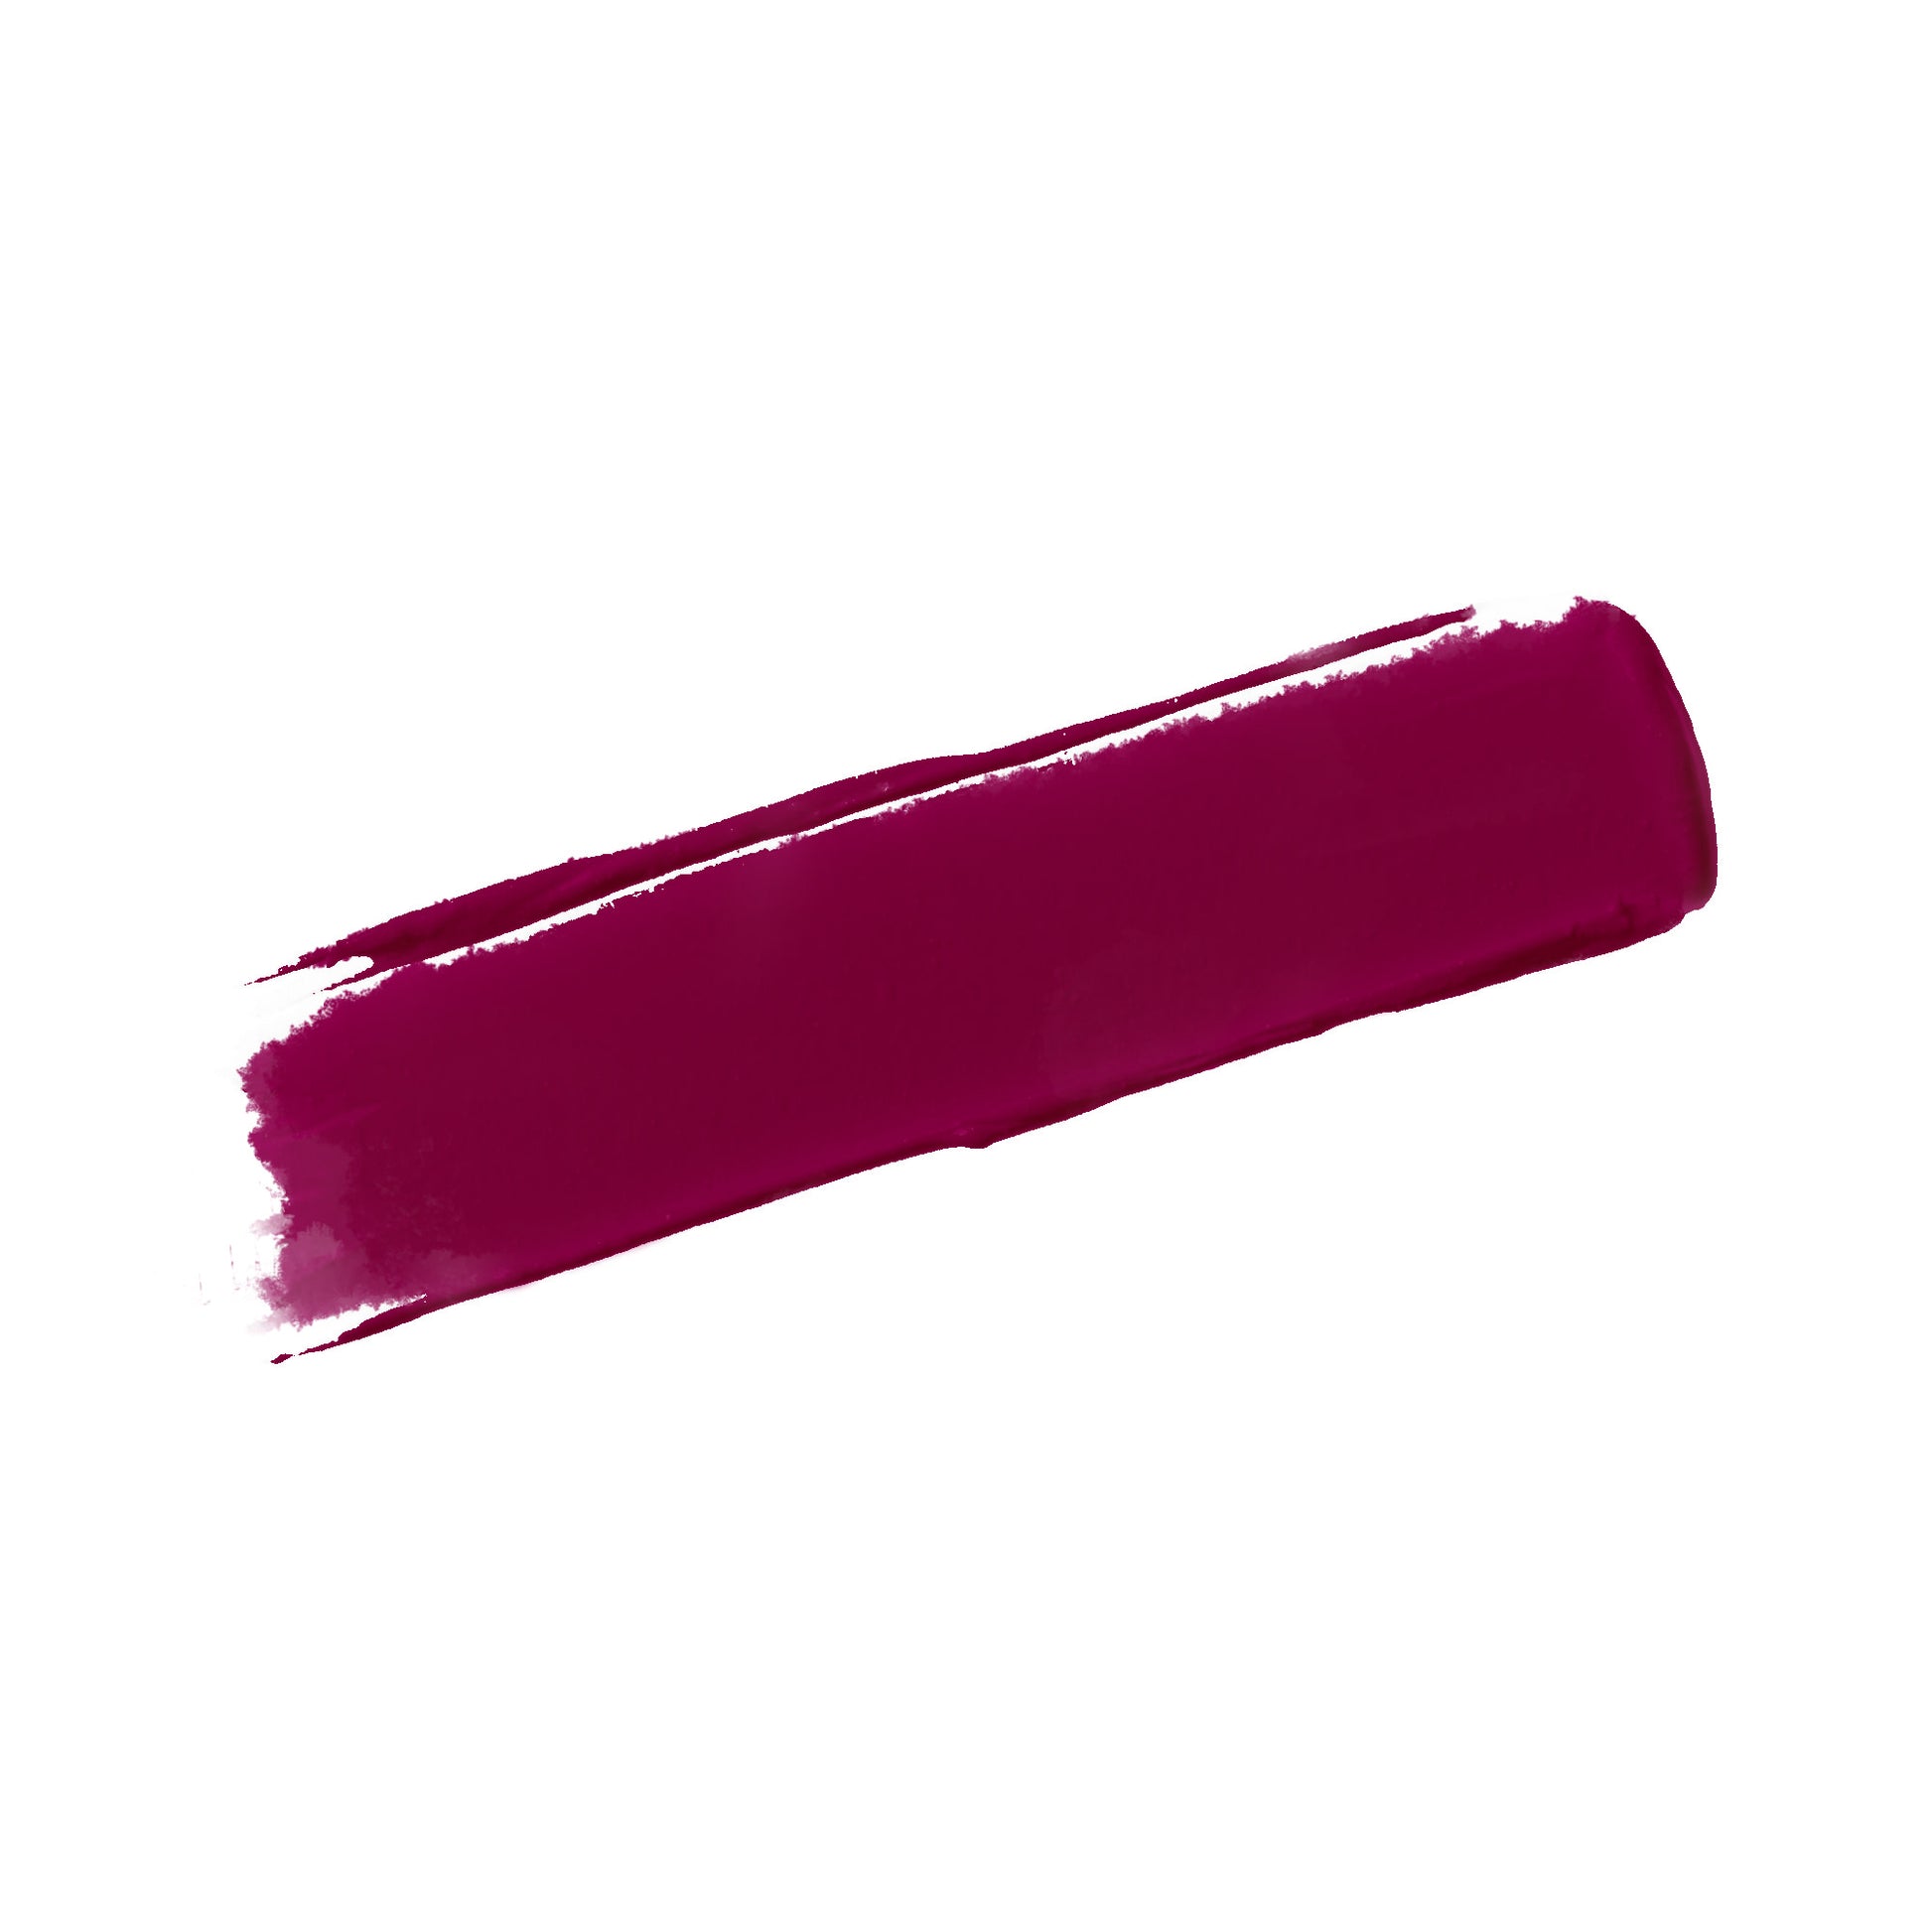 NXTE NXTEssence Gorgeous Liquid Lip Stick Swatch Color